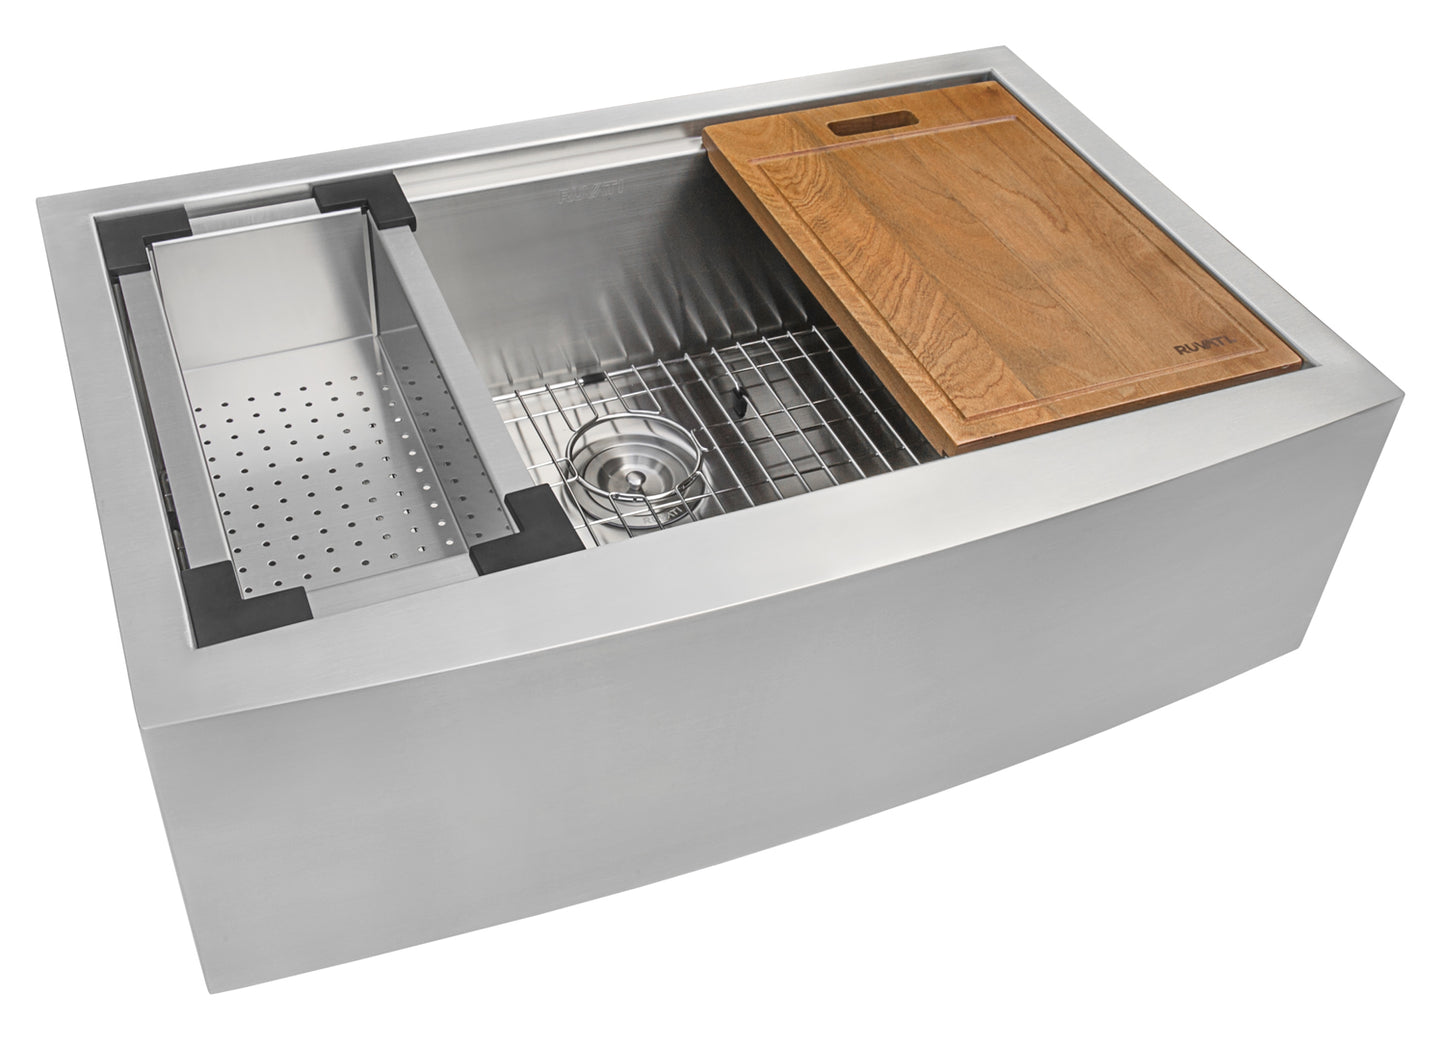 Ruvati Verona 36 x 22 inch Apron Front Stainless Steel Kitchen Sink